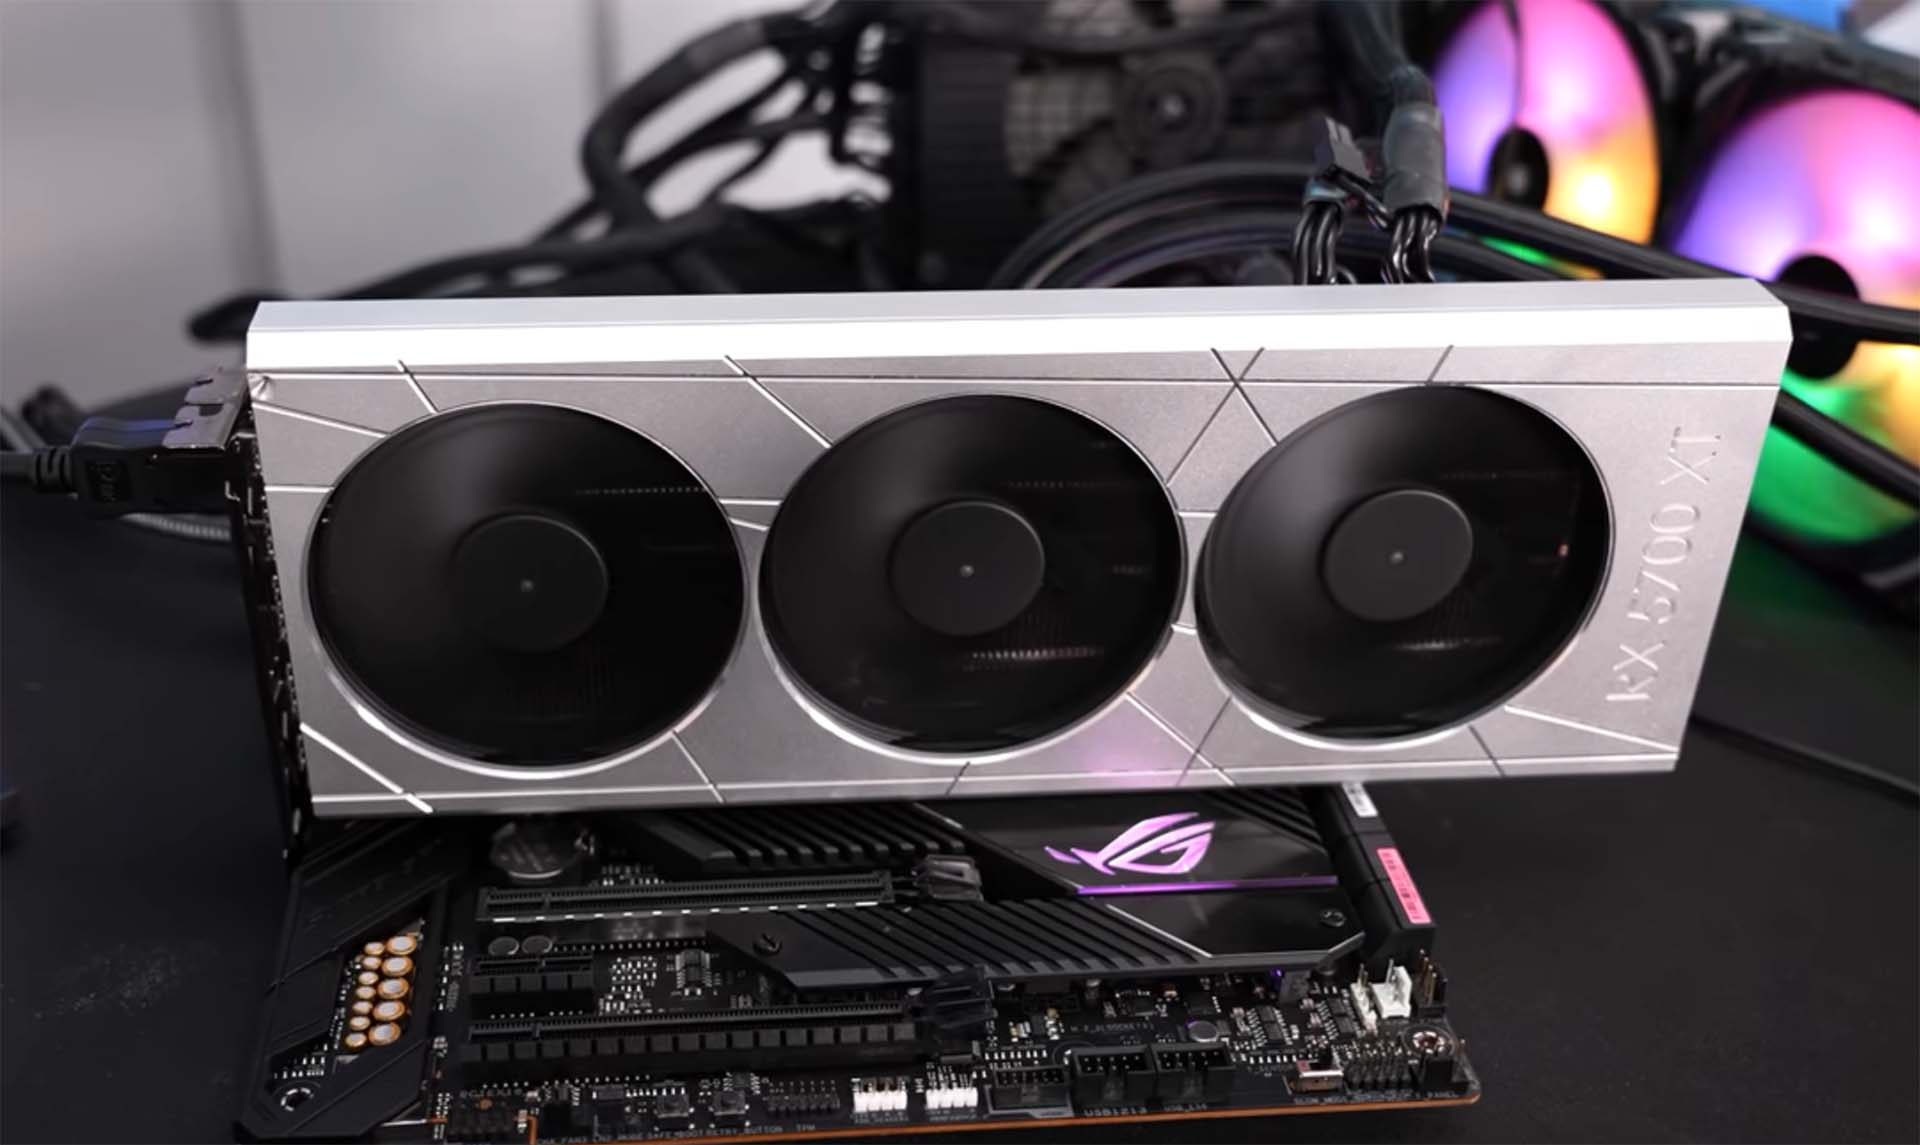  Noctua fan mod turns an unusable RX 5700 XT GPU into a beast 